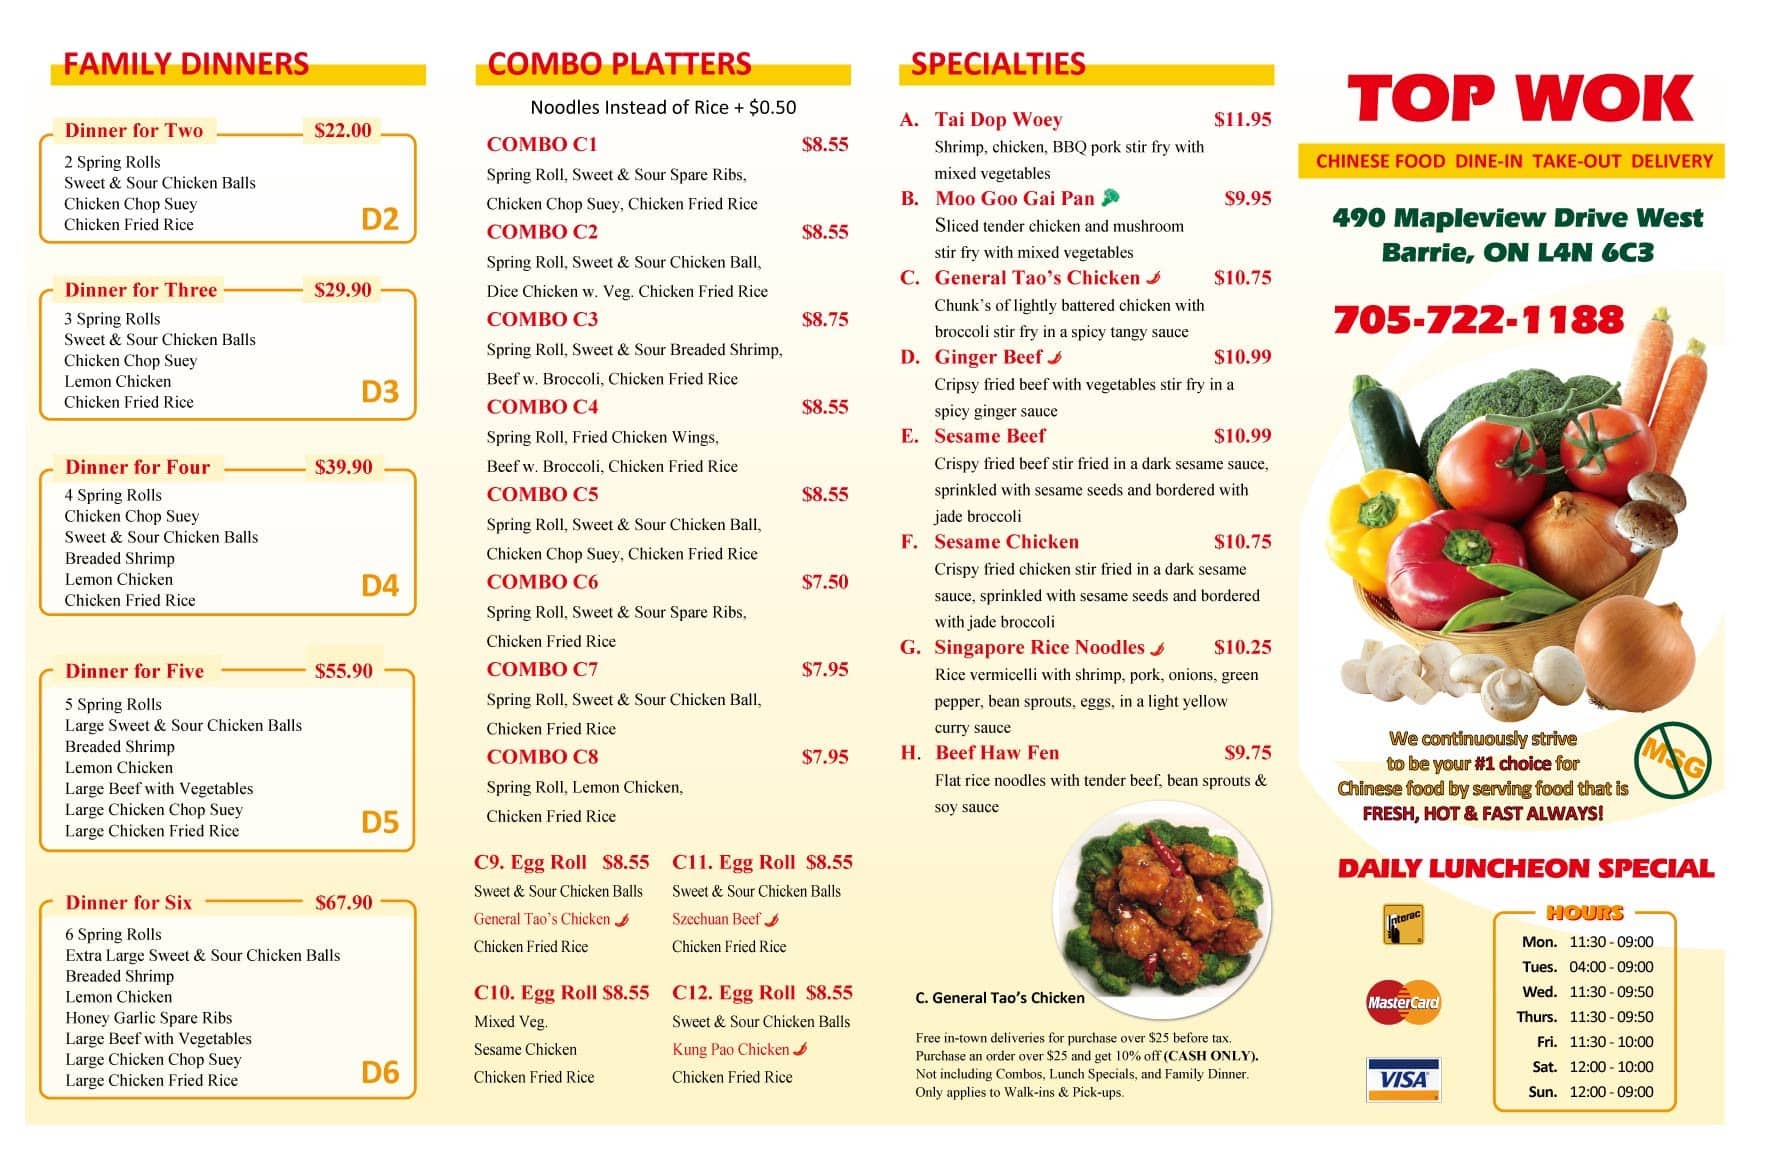 Top Wok menu.